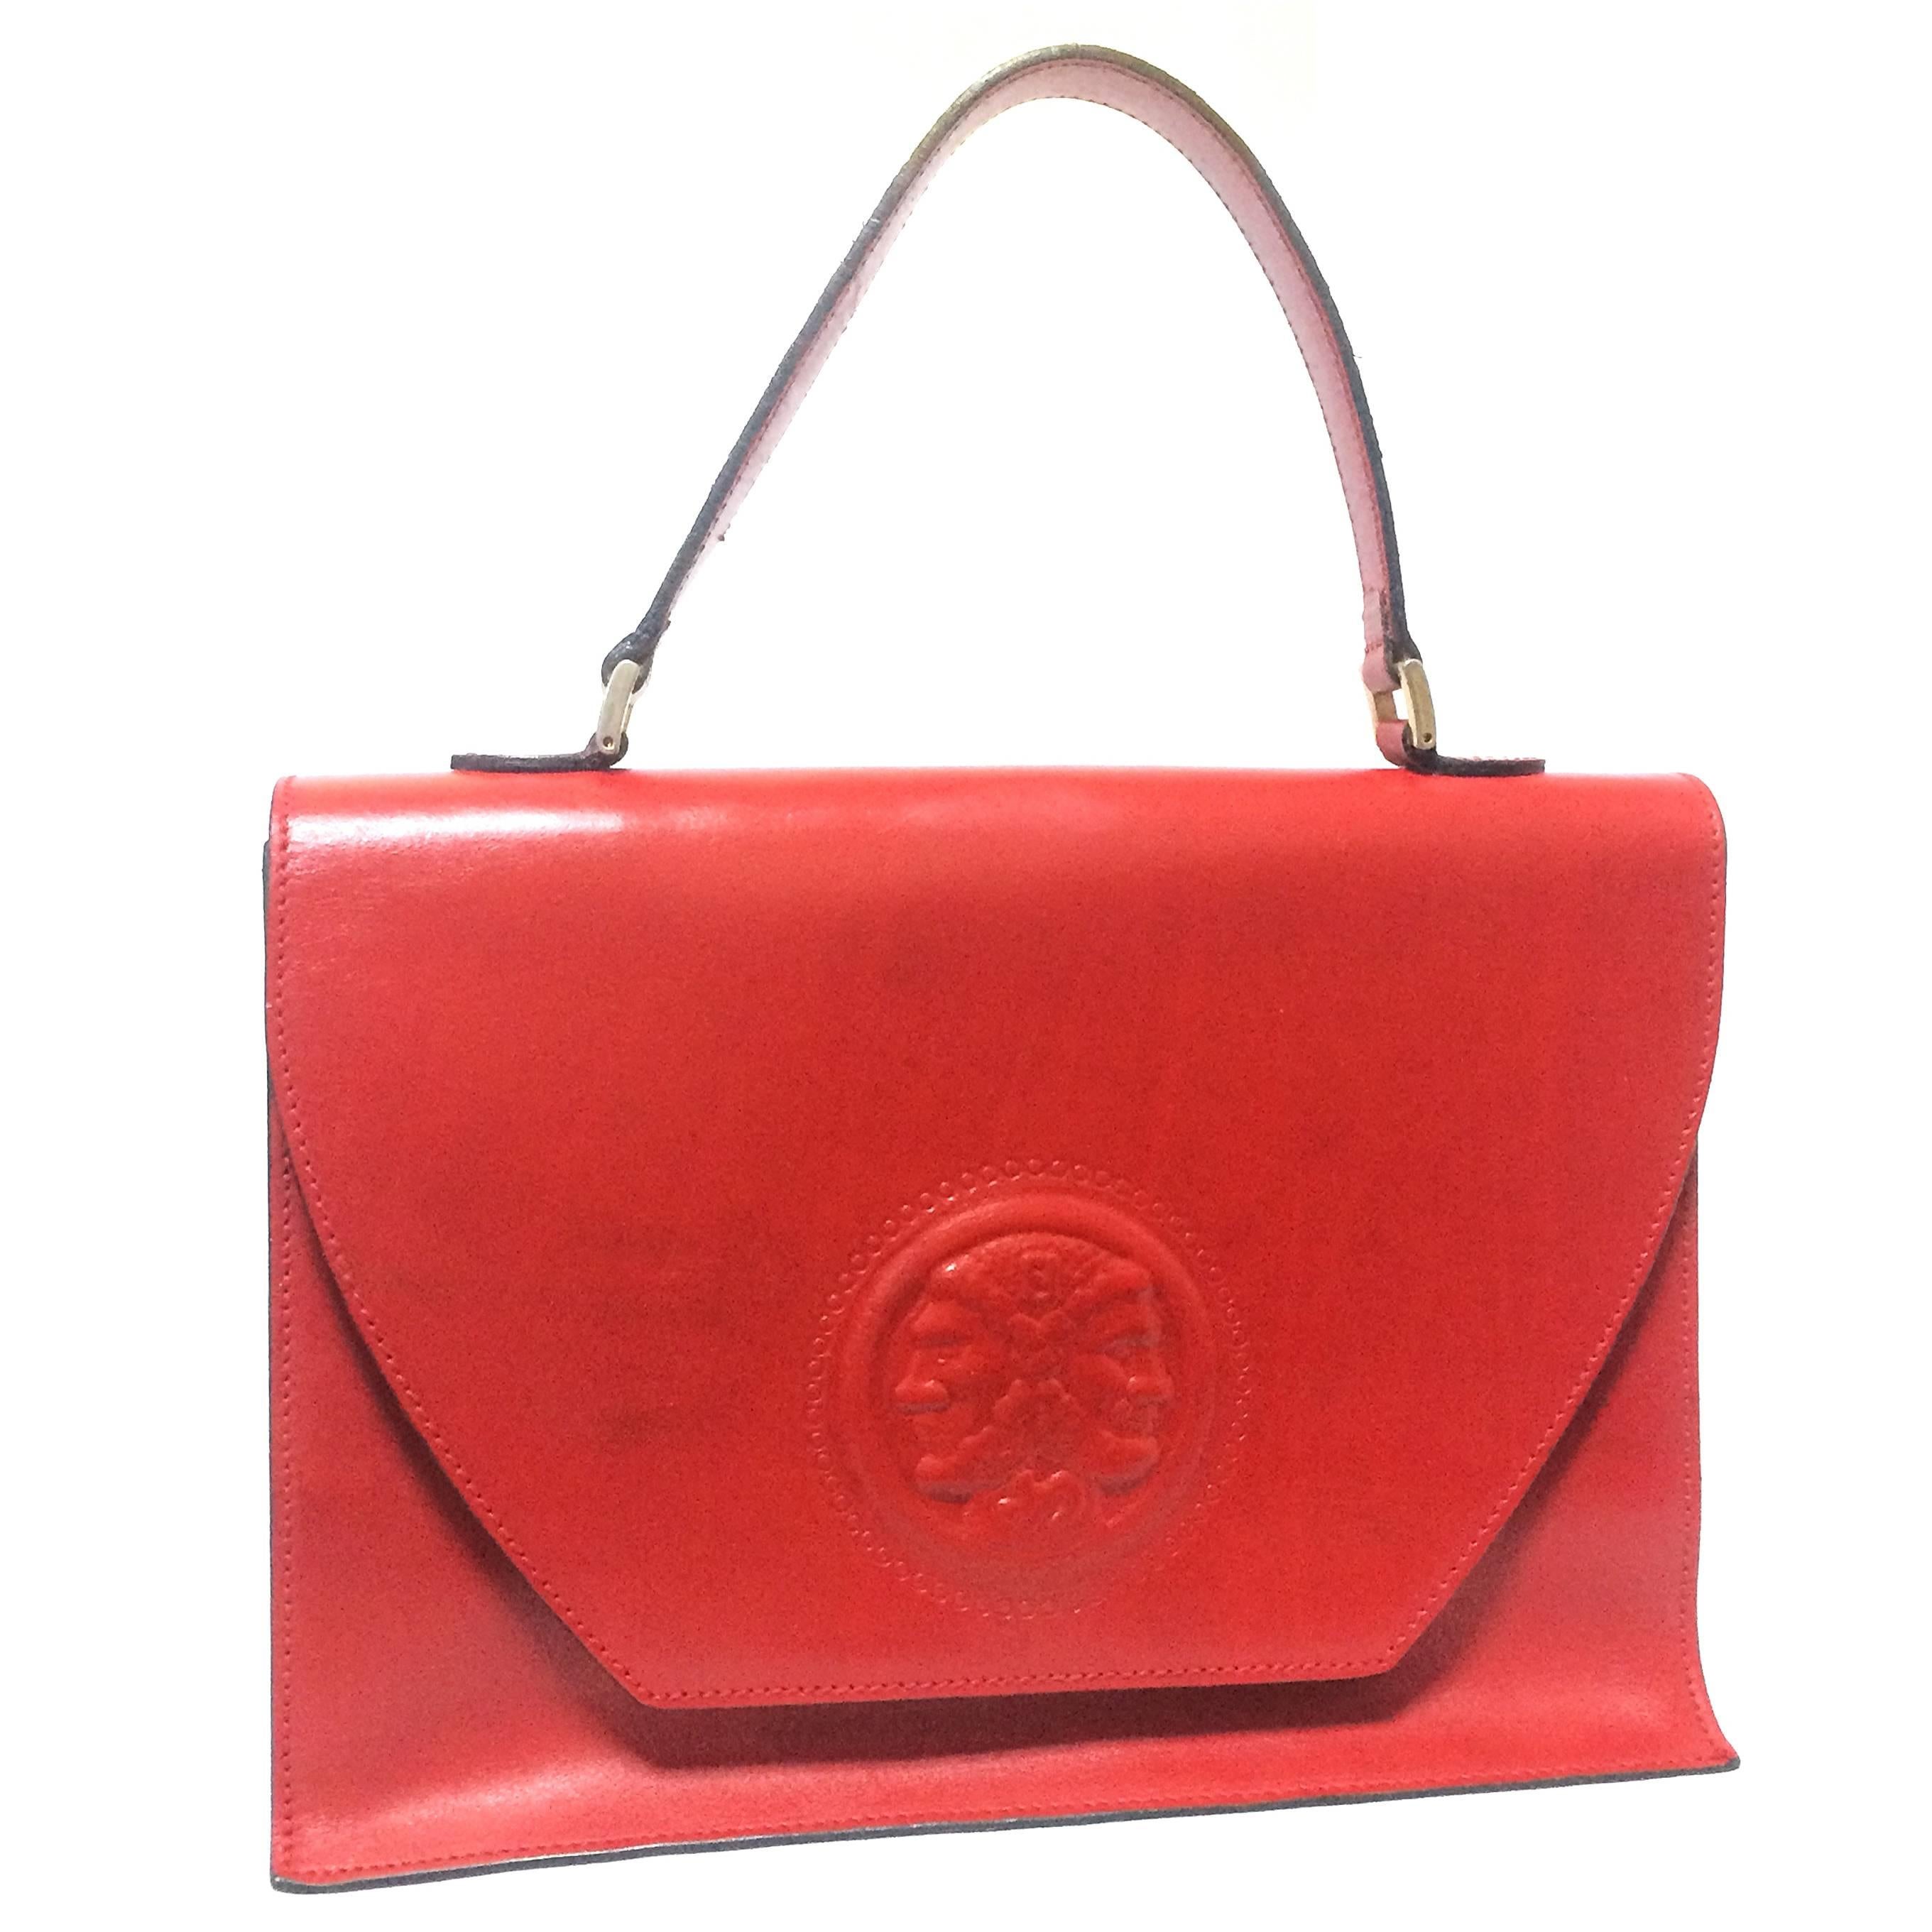 Vintage FENDI genuine red leather classic handbag with embossed Janus medallion. For Sale